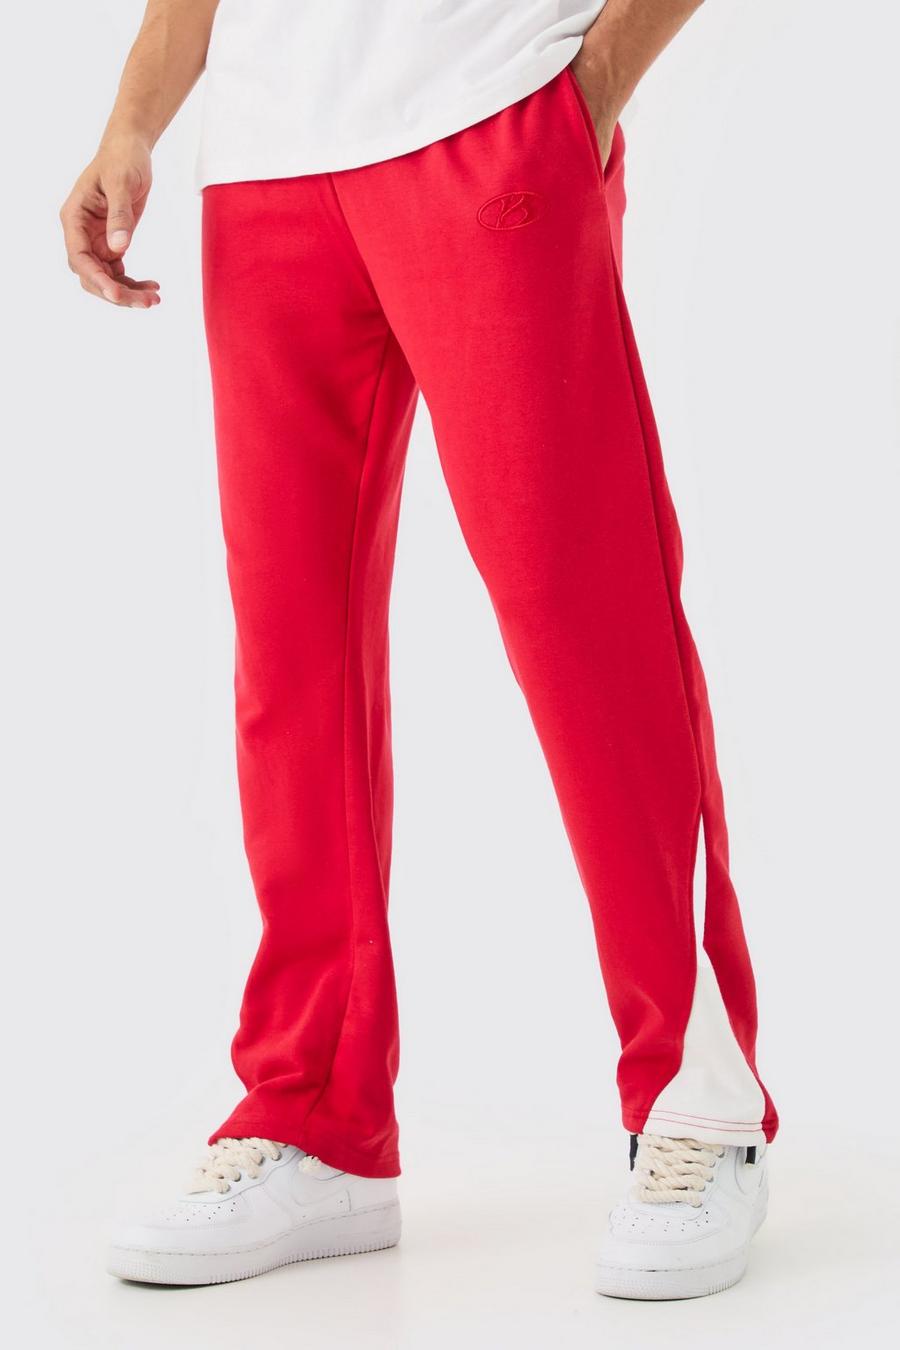 Pantalón deportivo Regular grueso con refuerzos sin acabar, Red